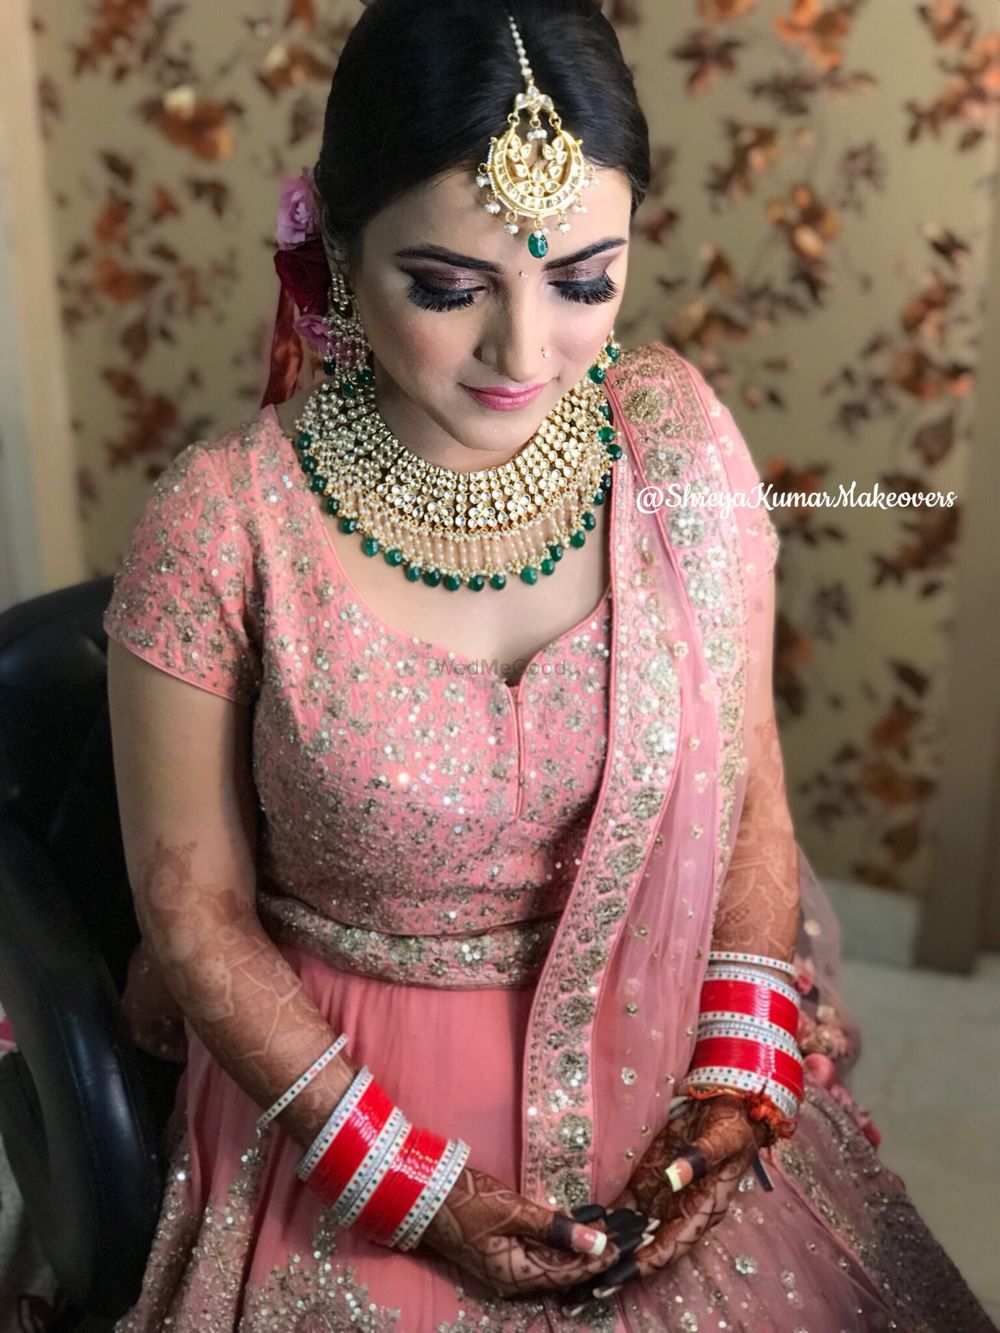 Photo From bridal Makeups  - By Shreya Kumar’s Makeup Studio